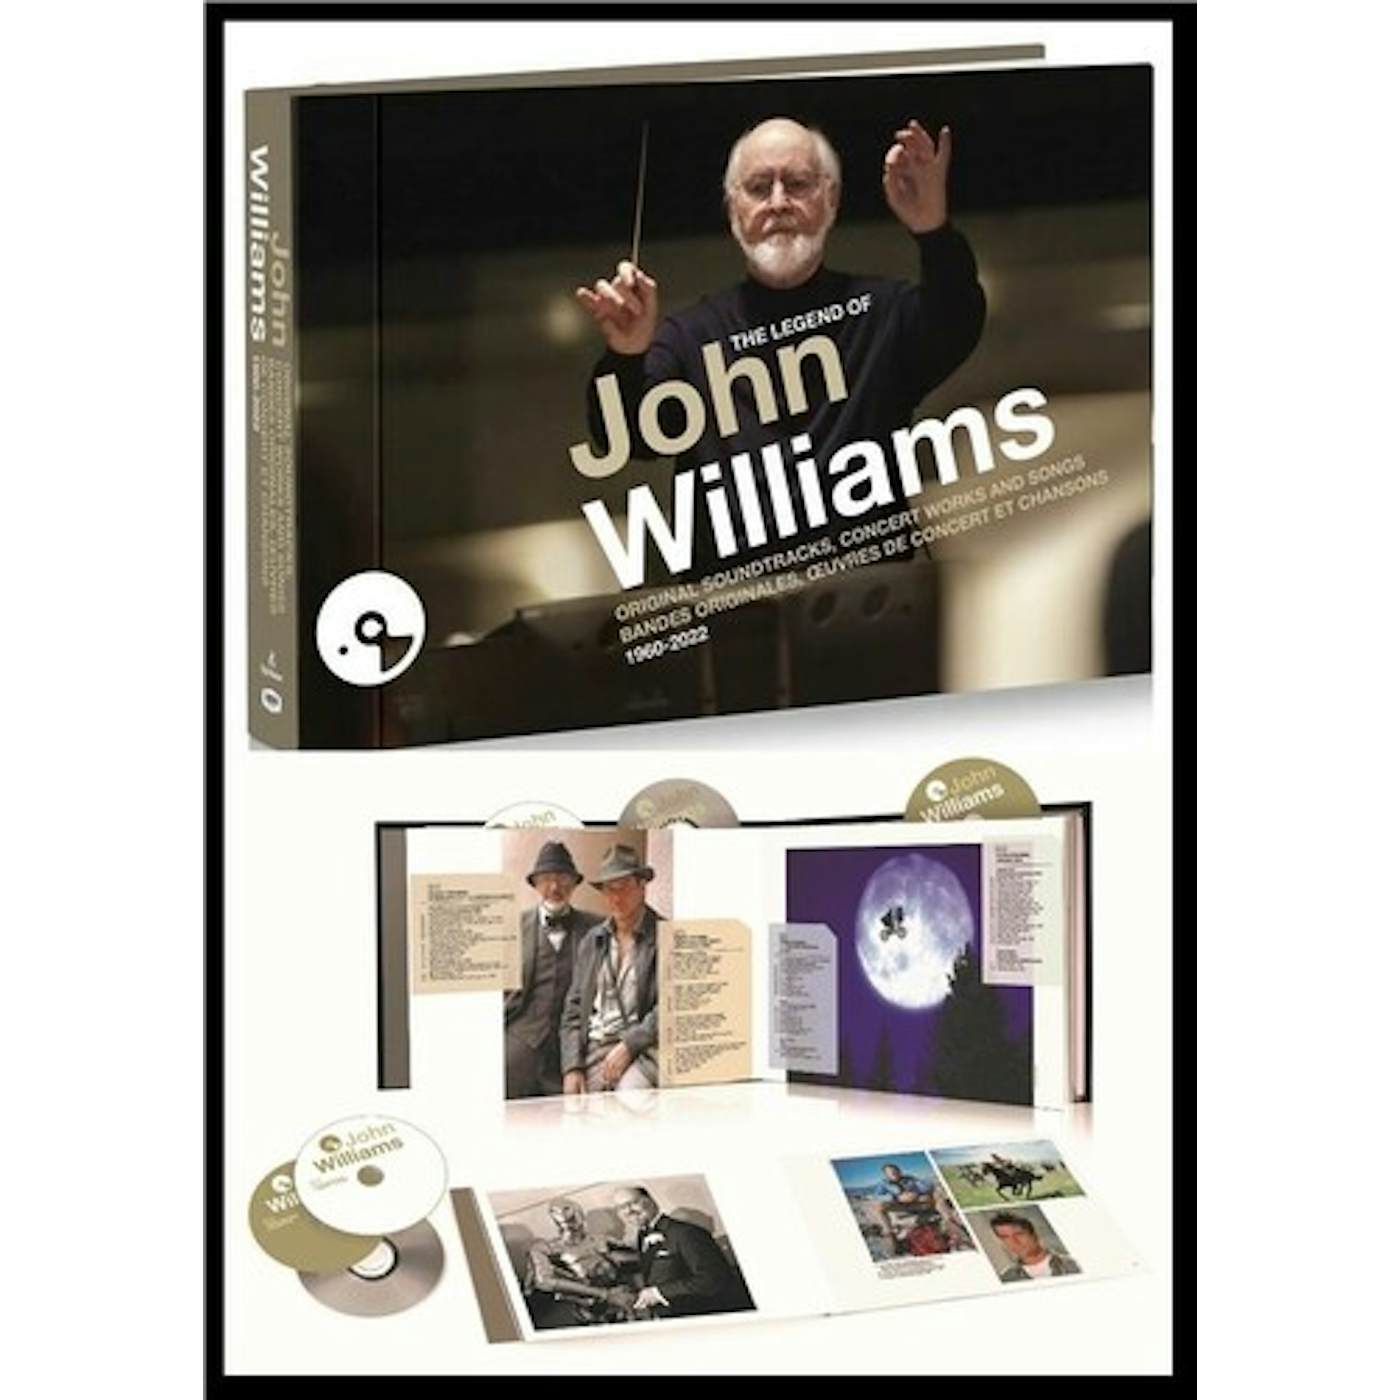 LEGEND OF JOHN WILLIAMS CD